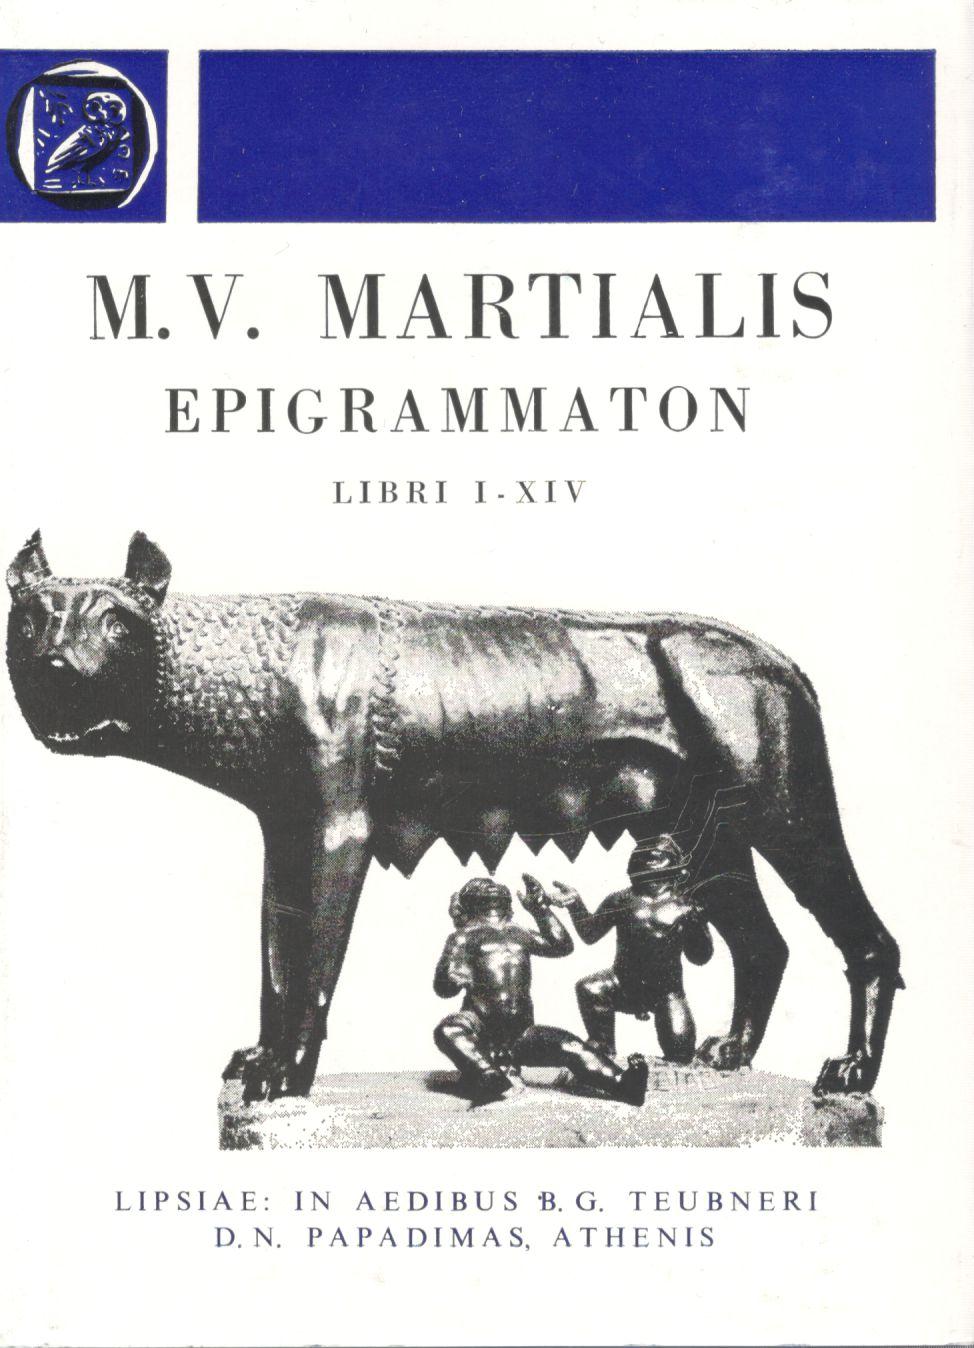 M. Valerii Martialis, Epigrammaton, Libri I-XIV, [Μάρκου Βαλερίου Μαρτιάλη, Επιγραμμάτων, βιβλία Α'-ΙΔ']